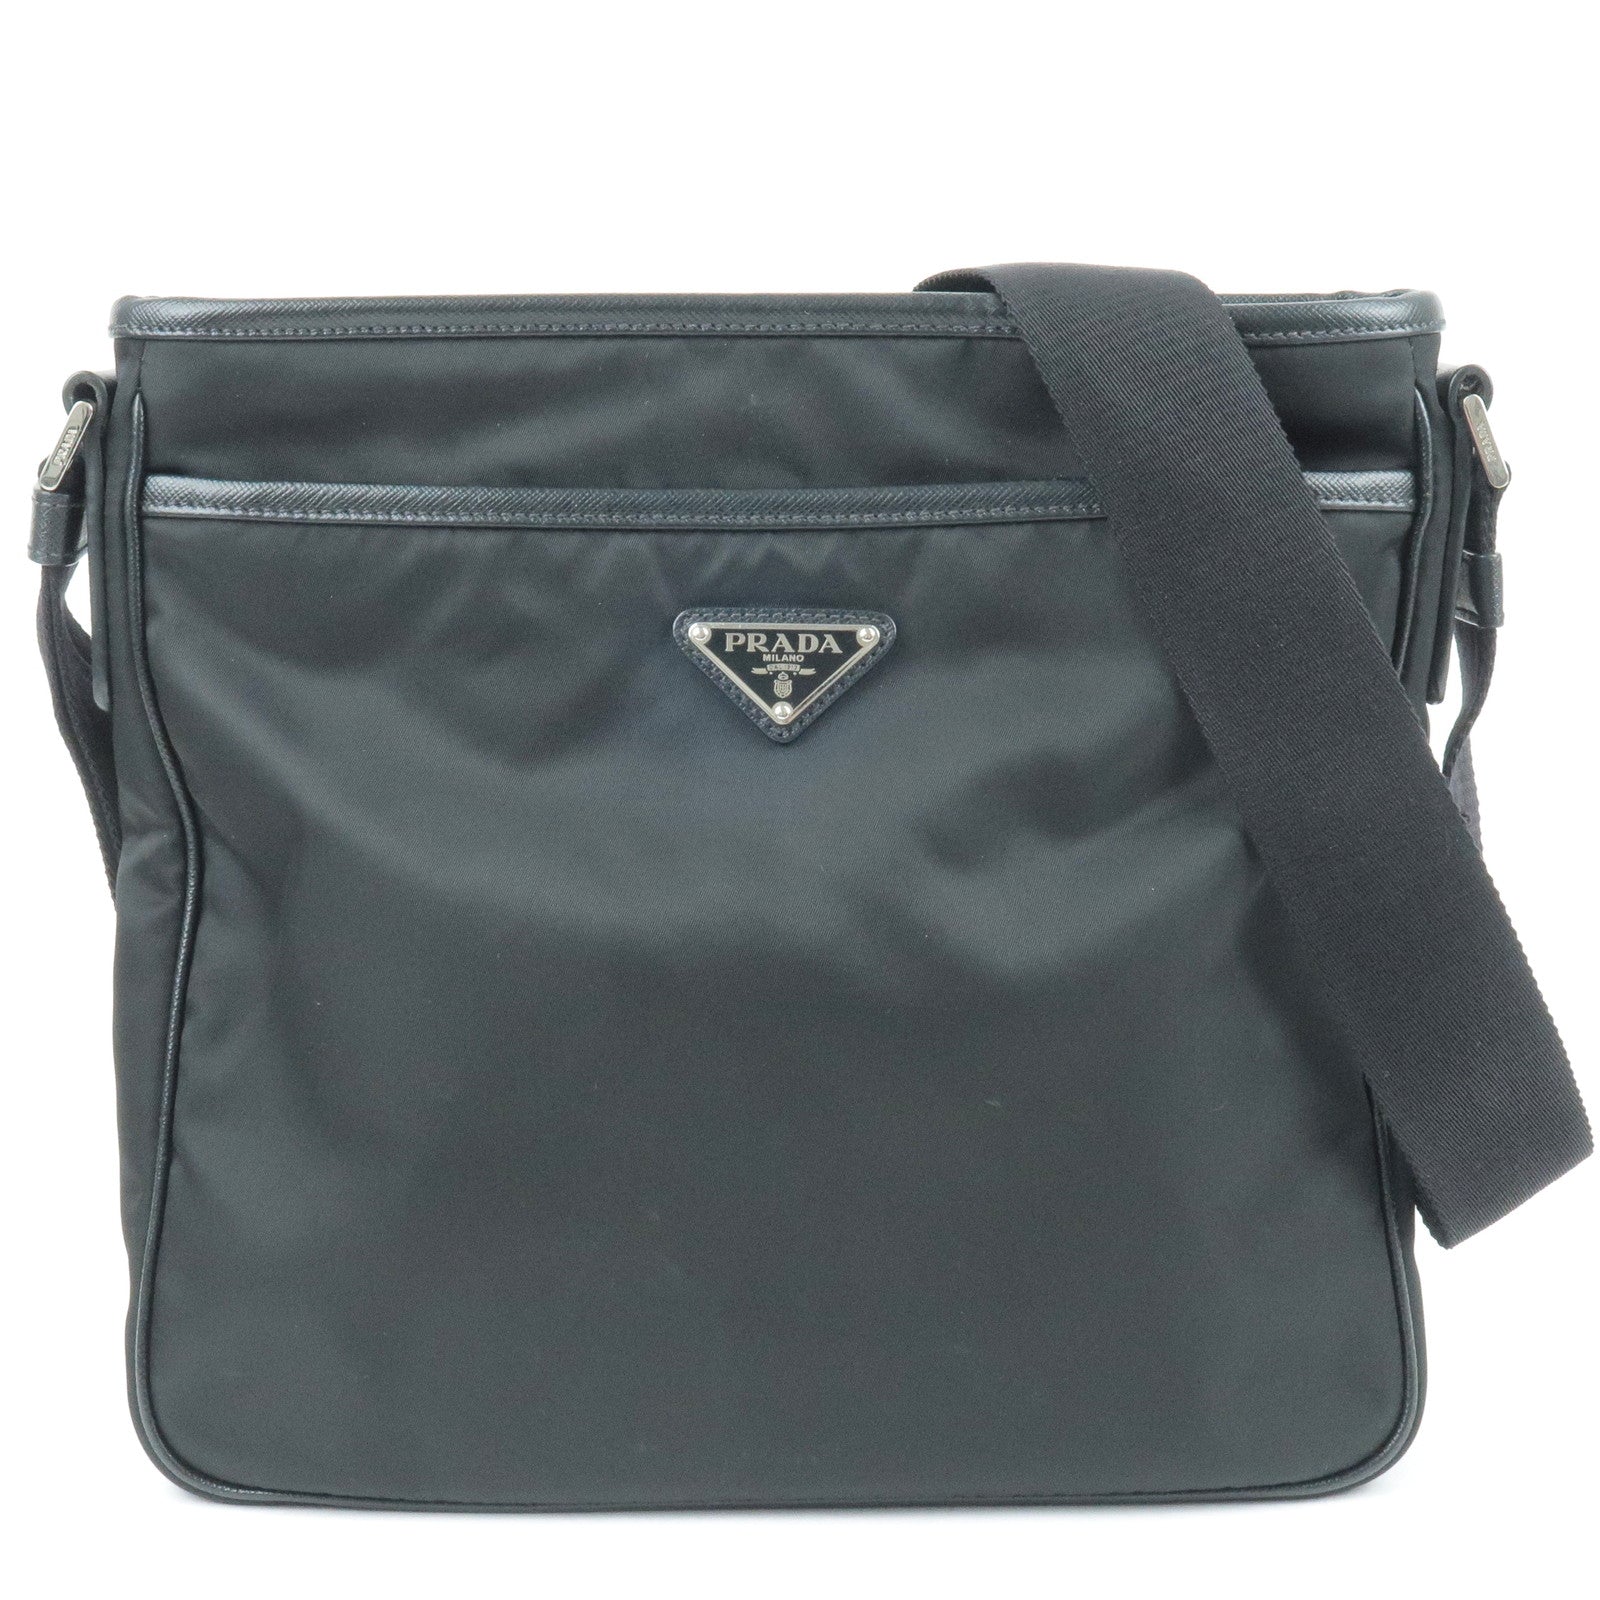 Prada Saffiano Leather Messenger Bag In Black